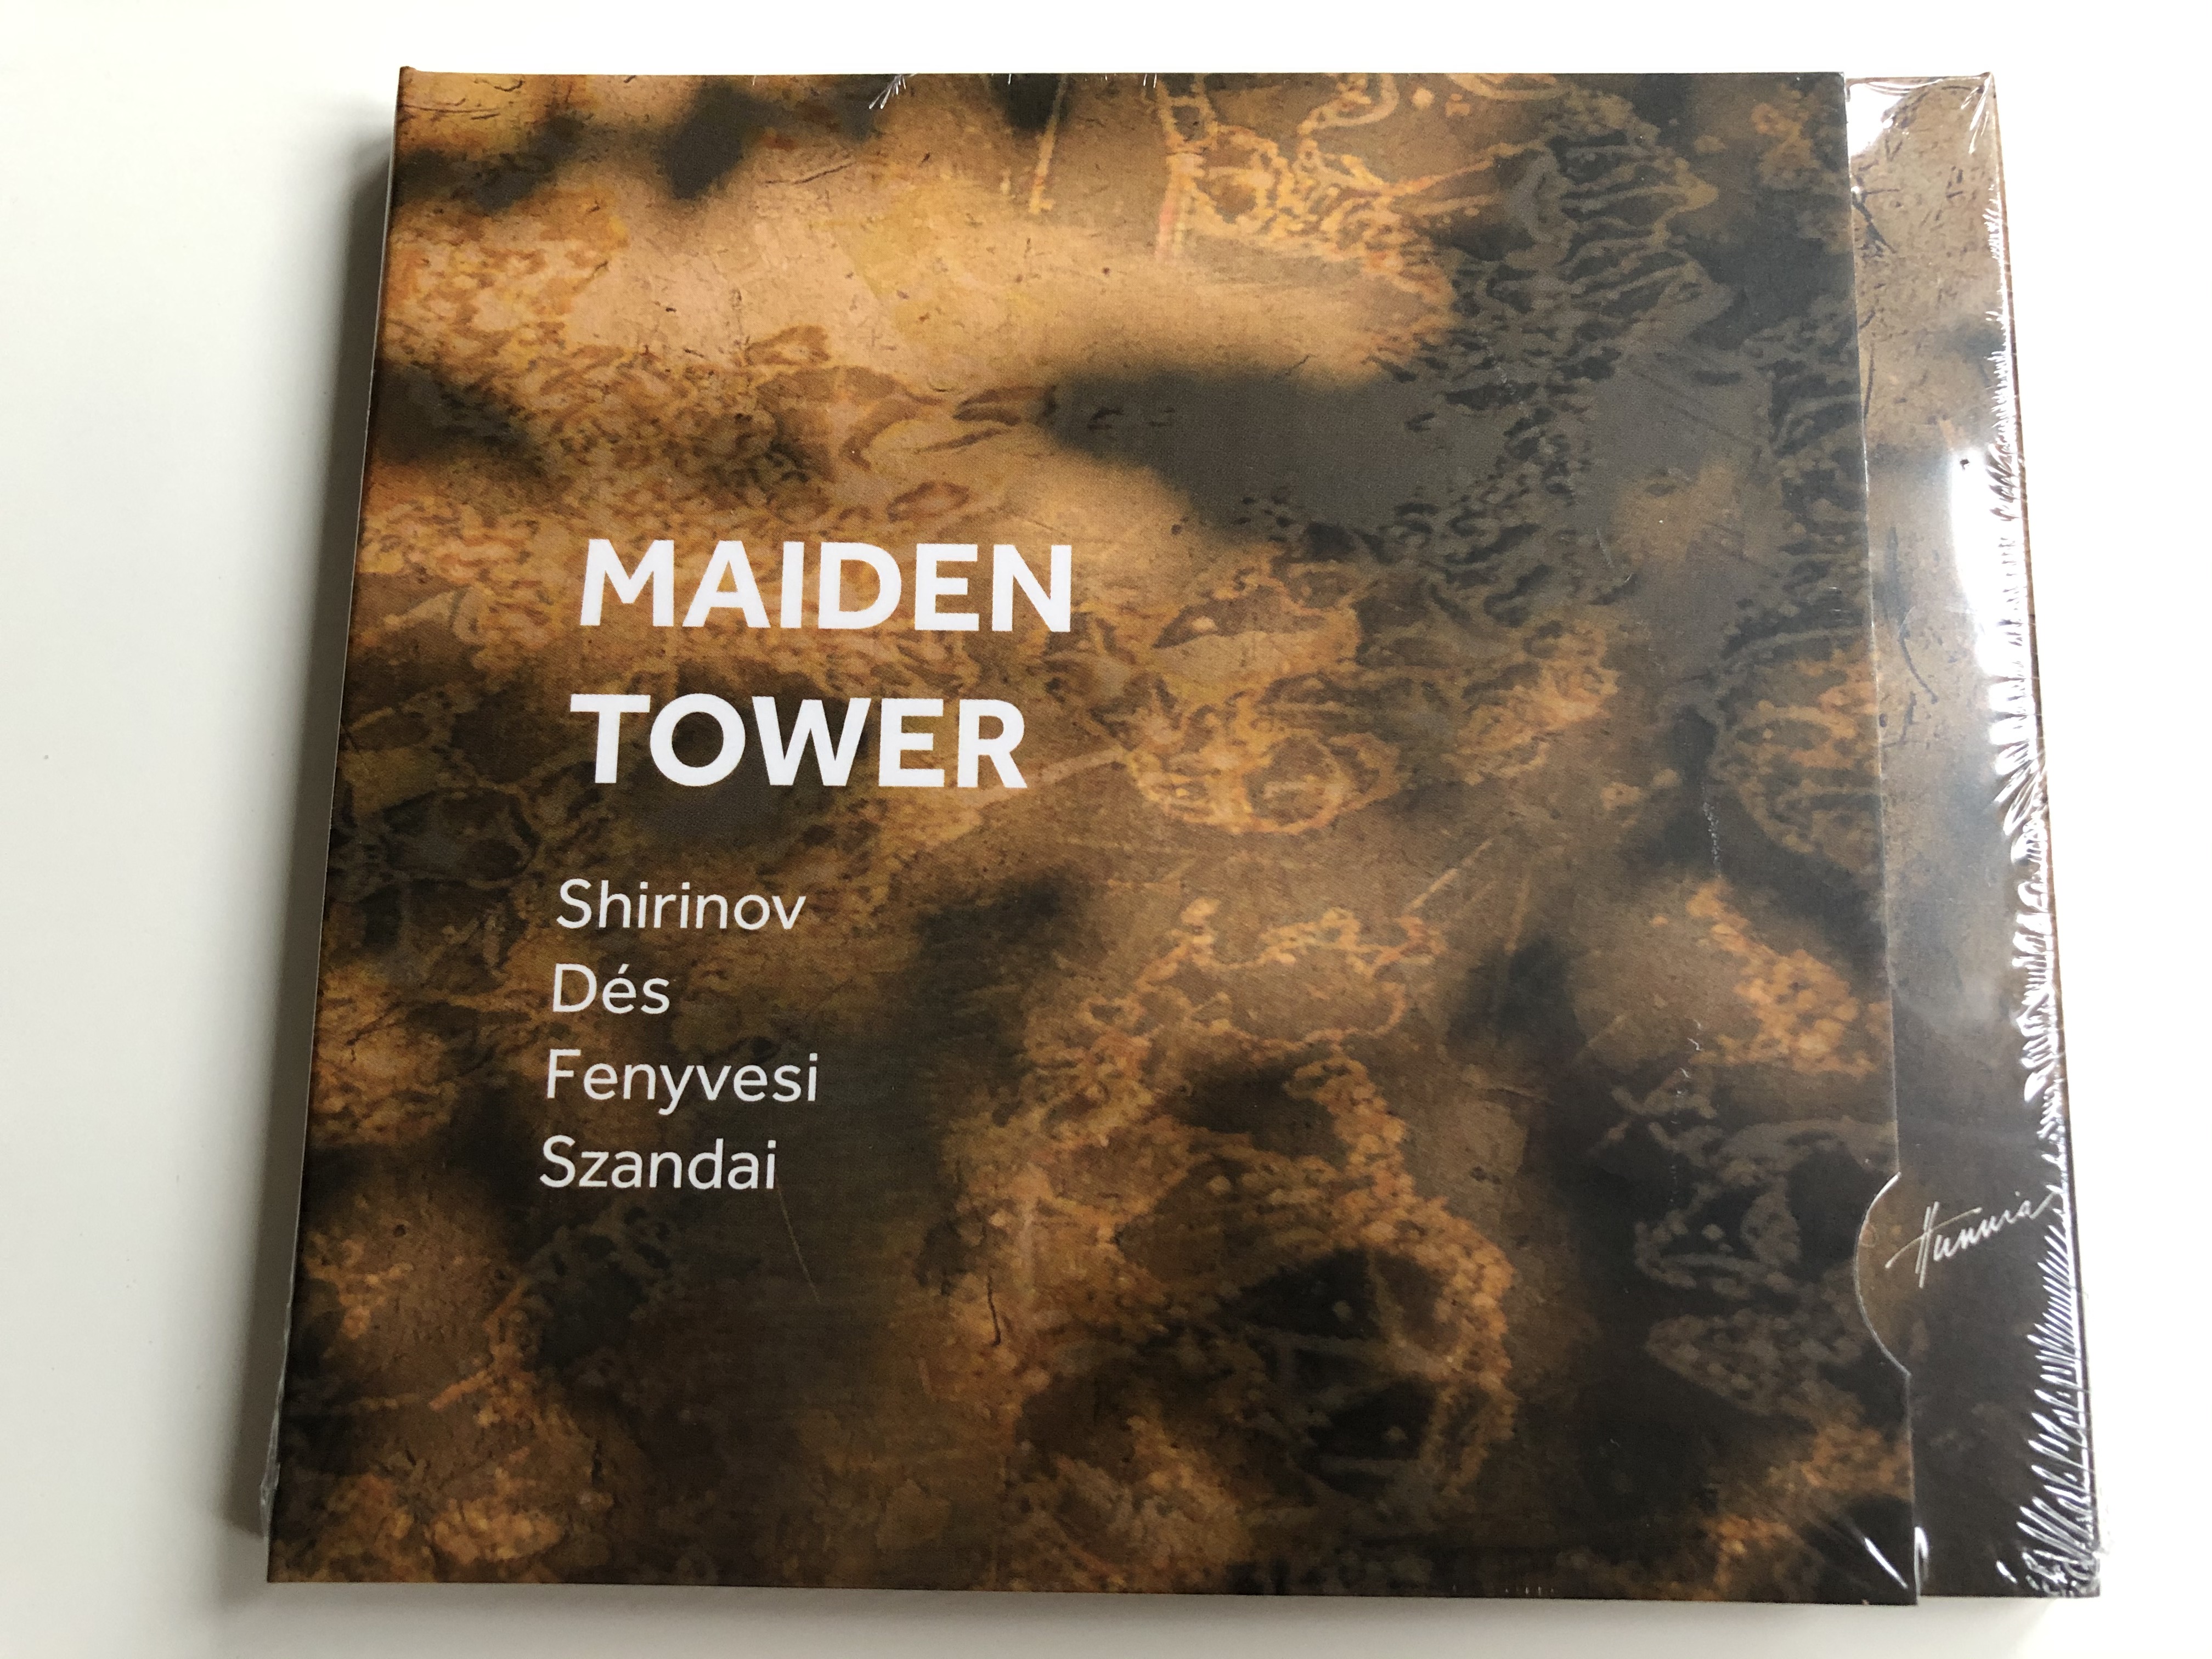 maiden-tower-shirinov-des-fenyvesi-szandai-hunnia-records-film-production-audio-cd-2017-hrcd1707-1-.jpg